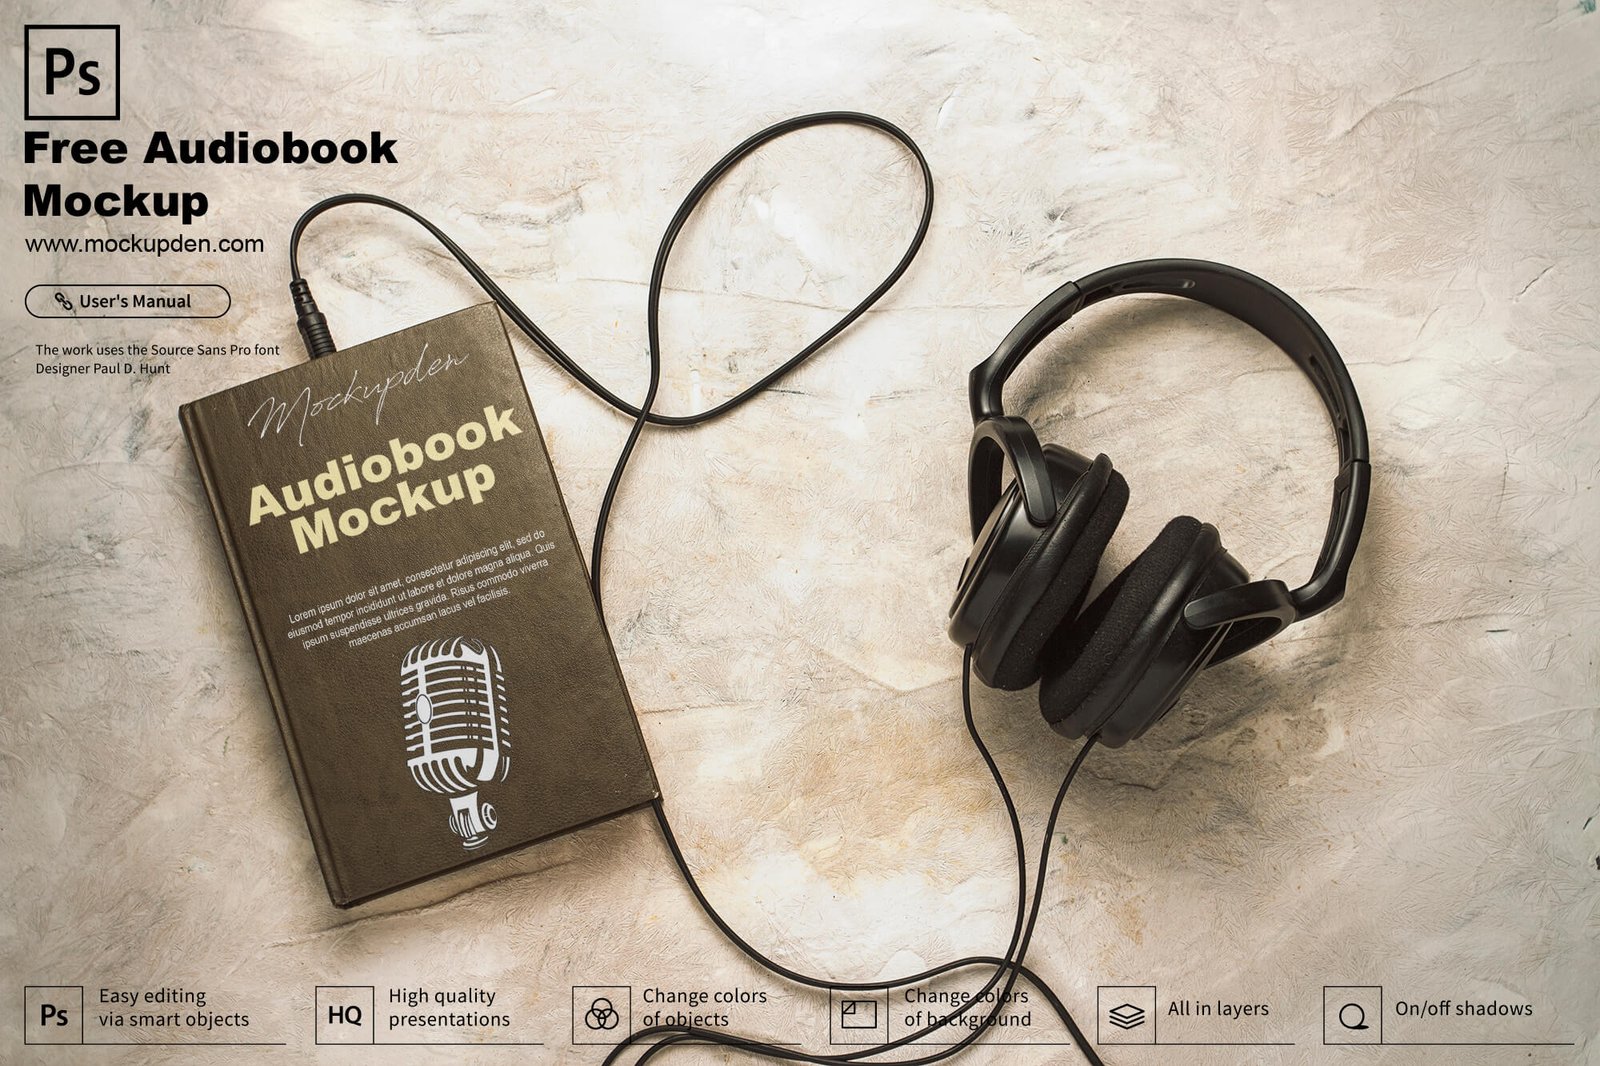 Free Audiobook Mockup PSD Template